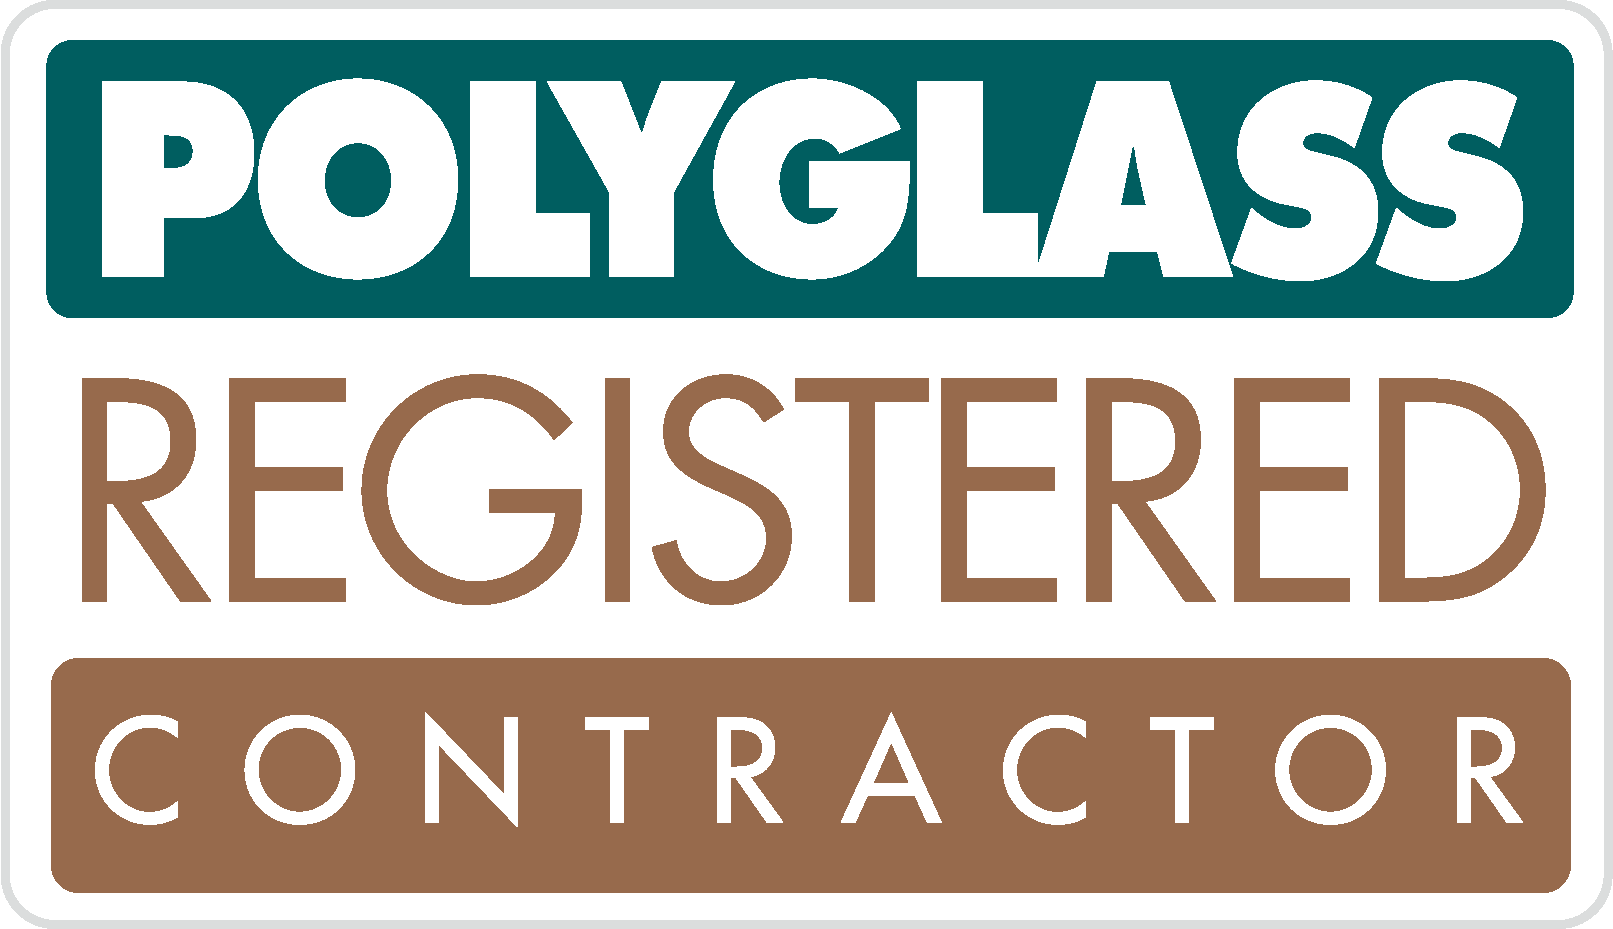 Polyglass Registered